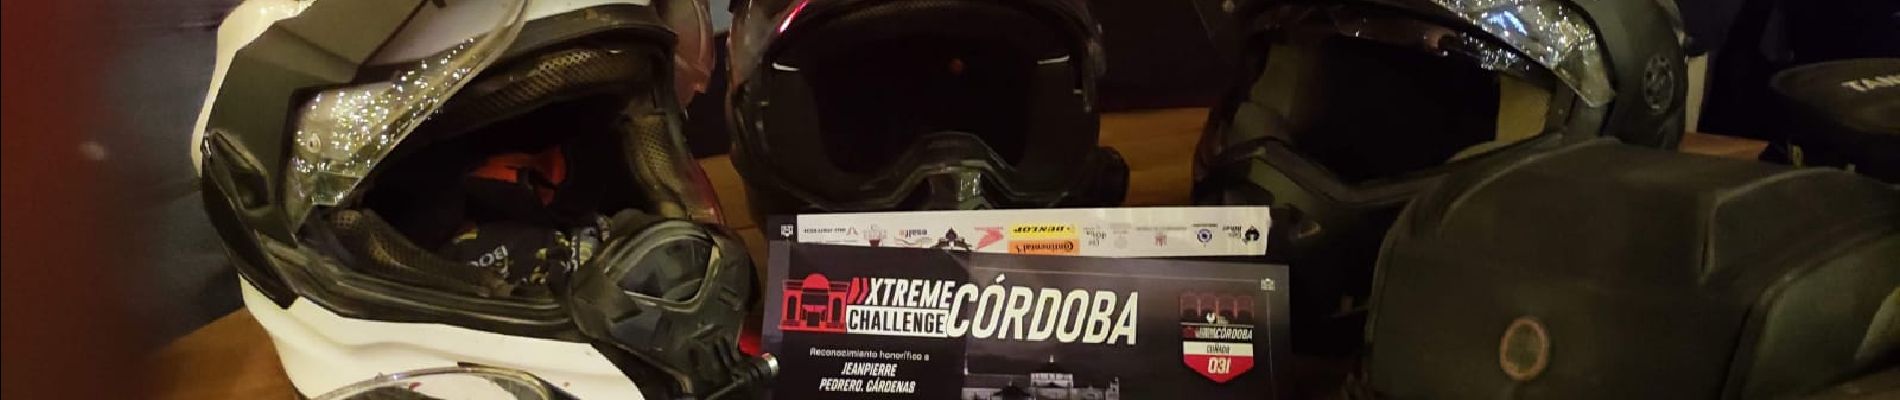 Randonnée Moto-cross Cordoue - Xtreme Challenge Cordoba - Photo